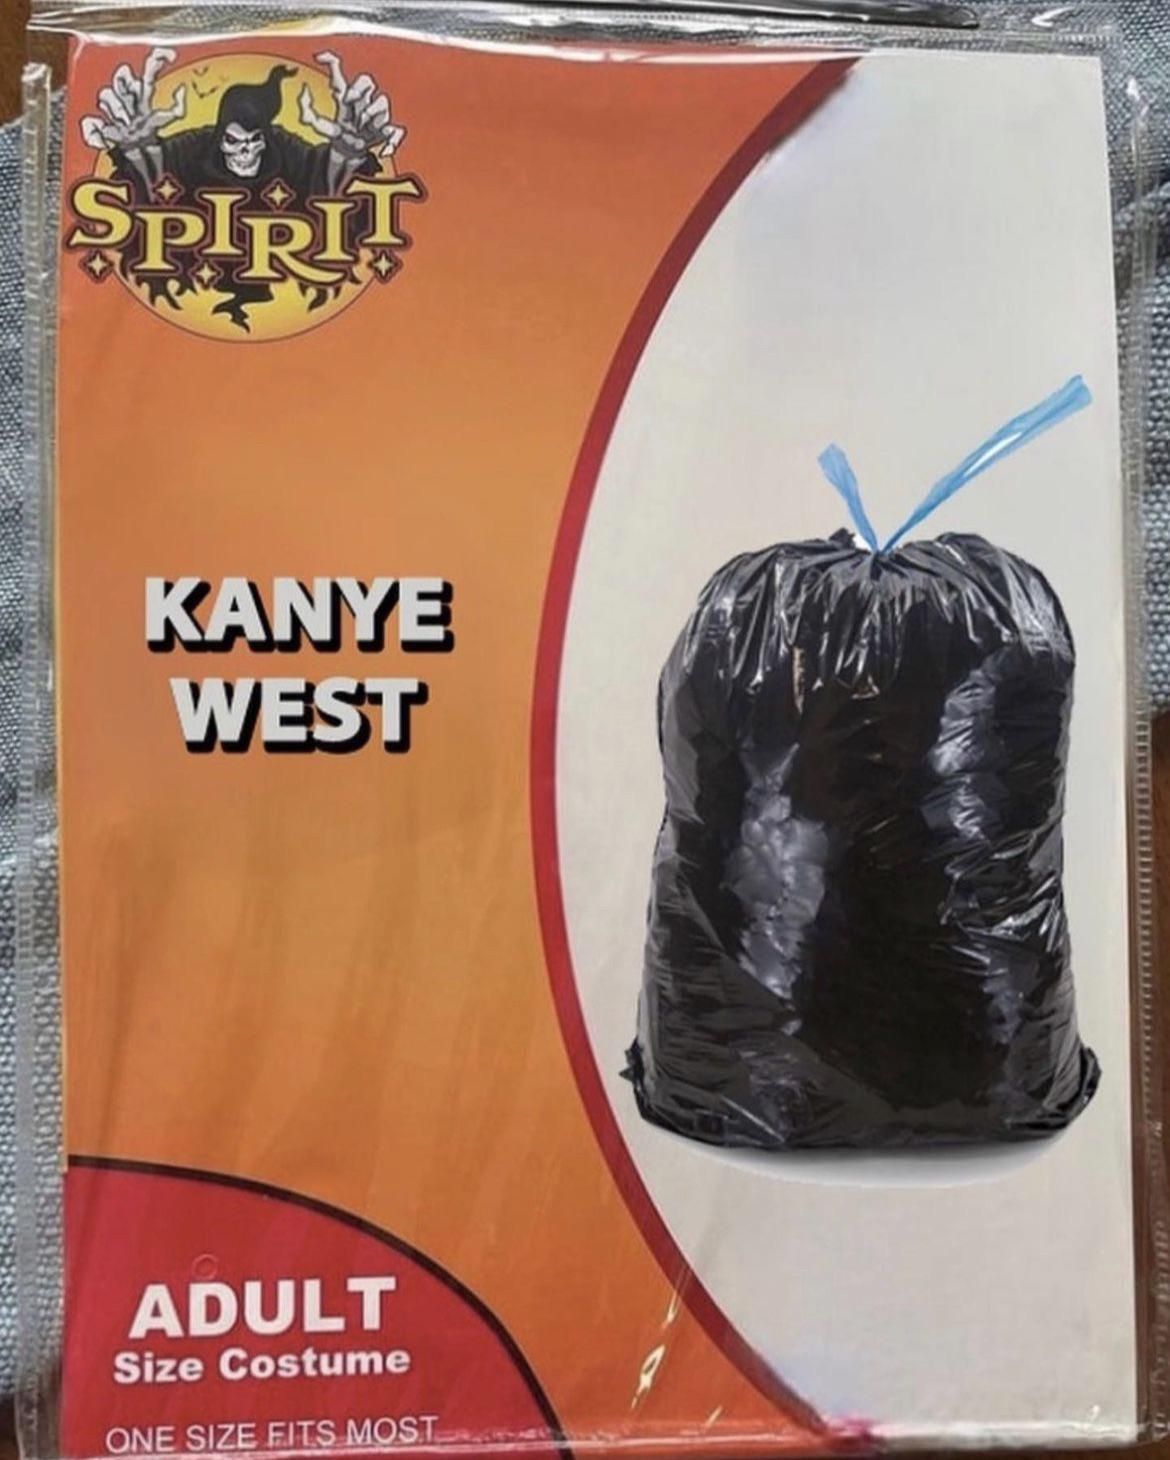 Kanye costume